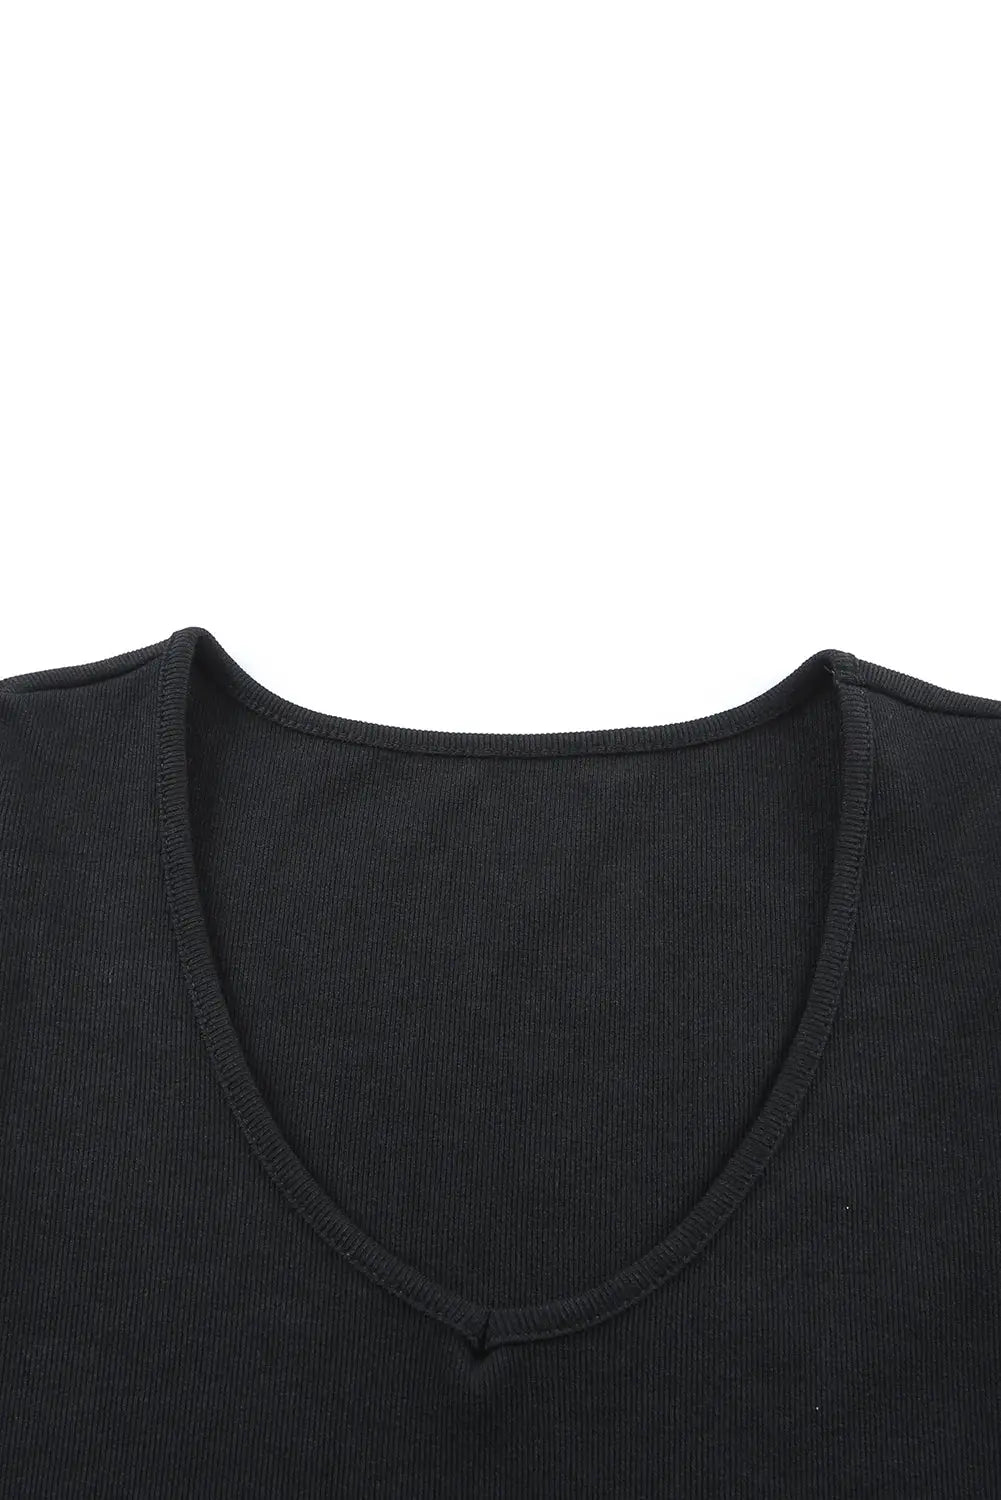 Black rib knitted ruffle sleeve u neck top - tank tops